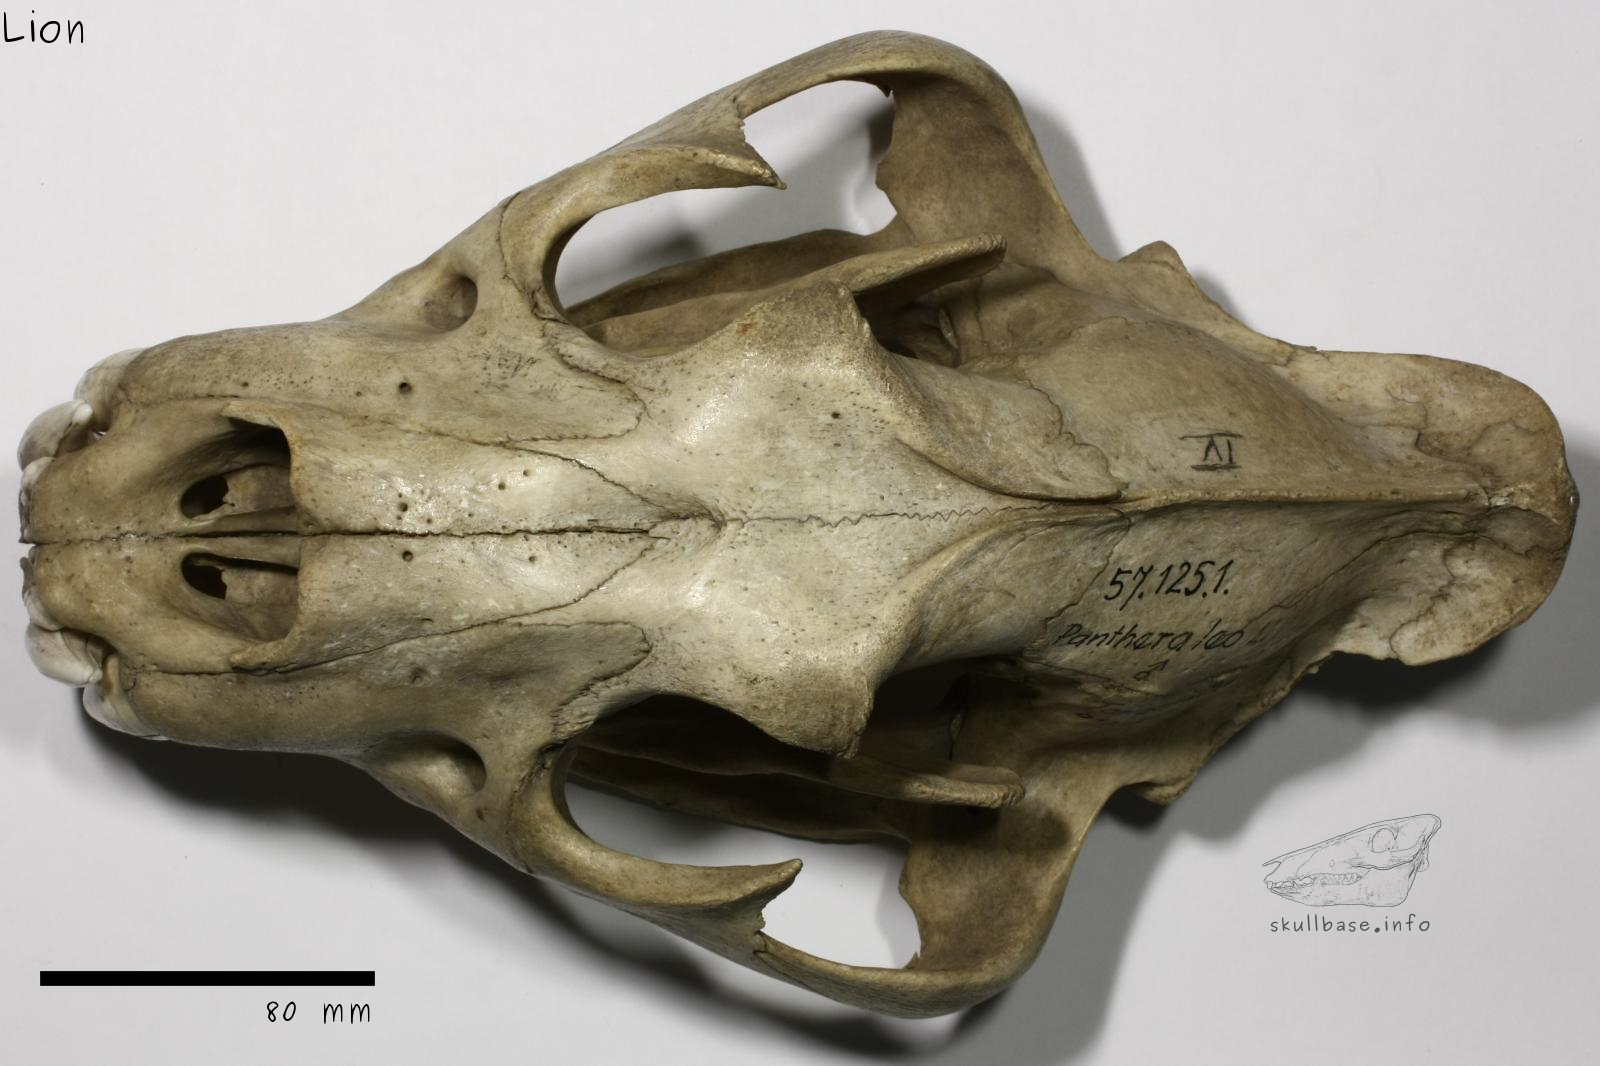 Lion (Panthera leo) skull dorsal view